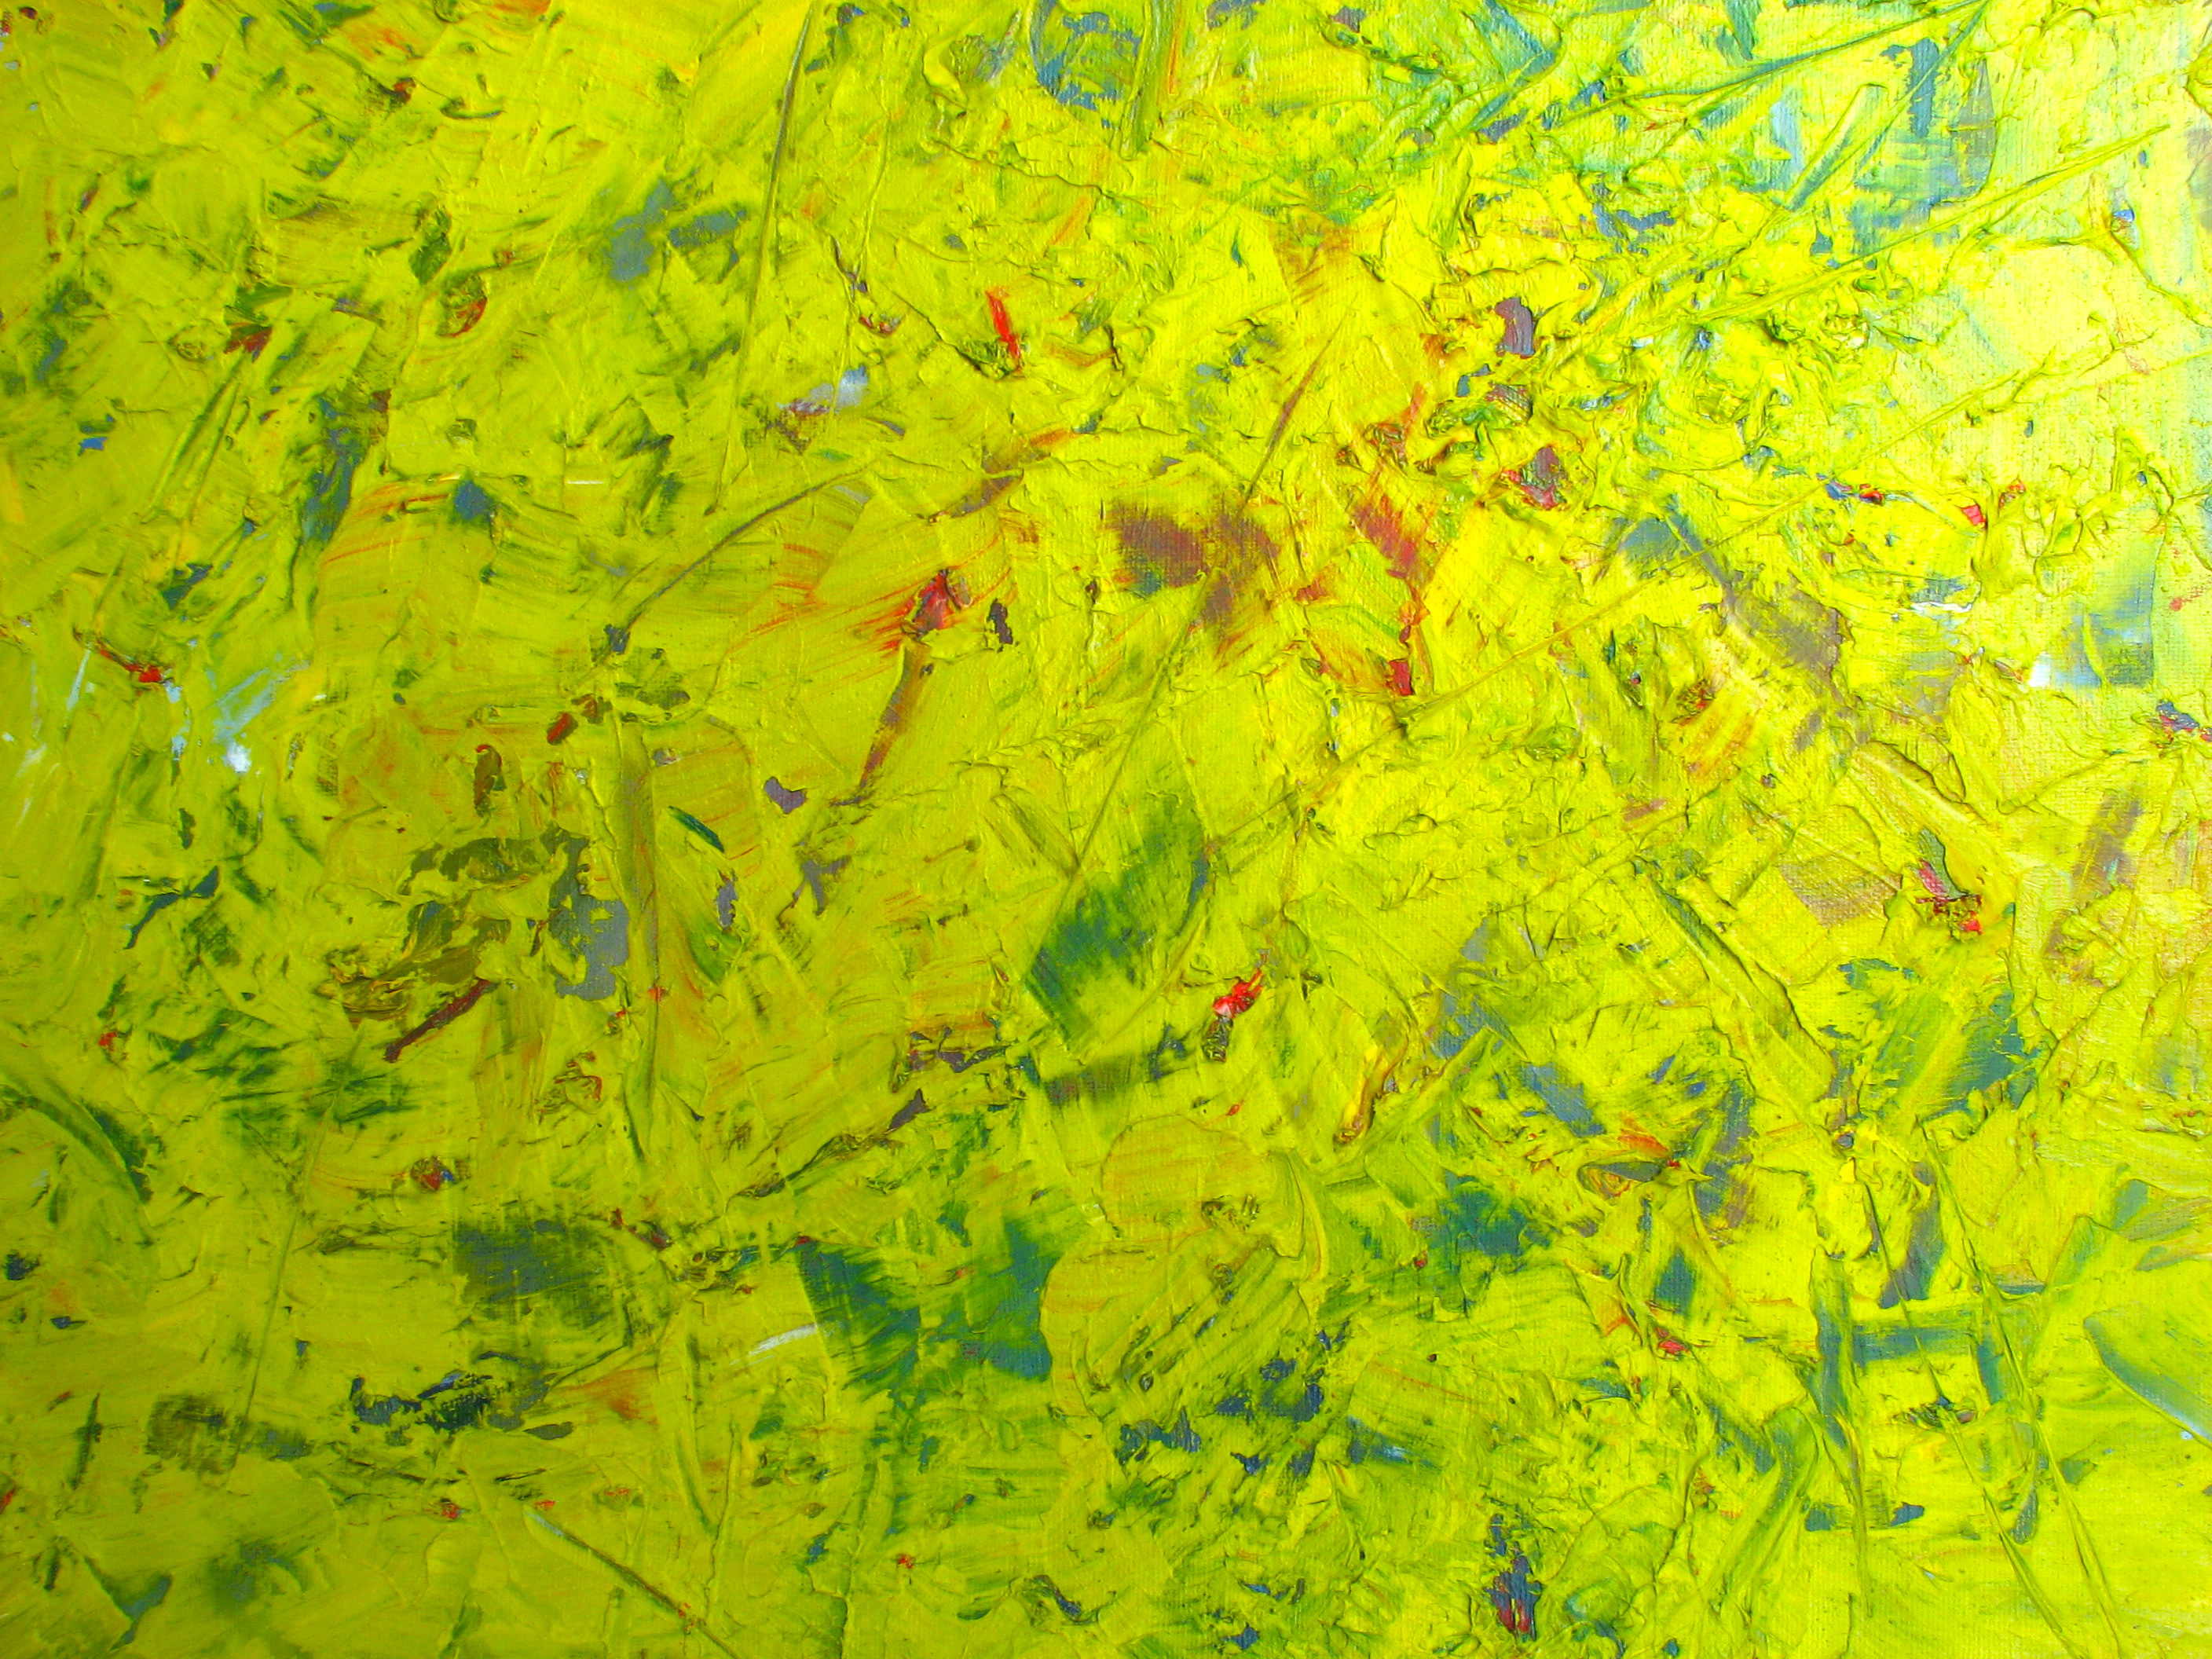 green paint, texture paints, background, download photo, green paint texture background